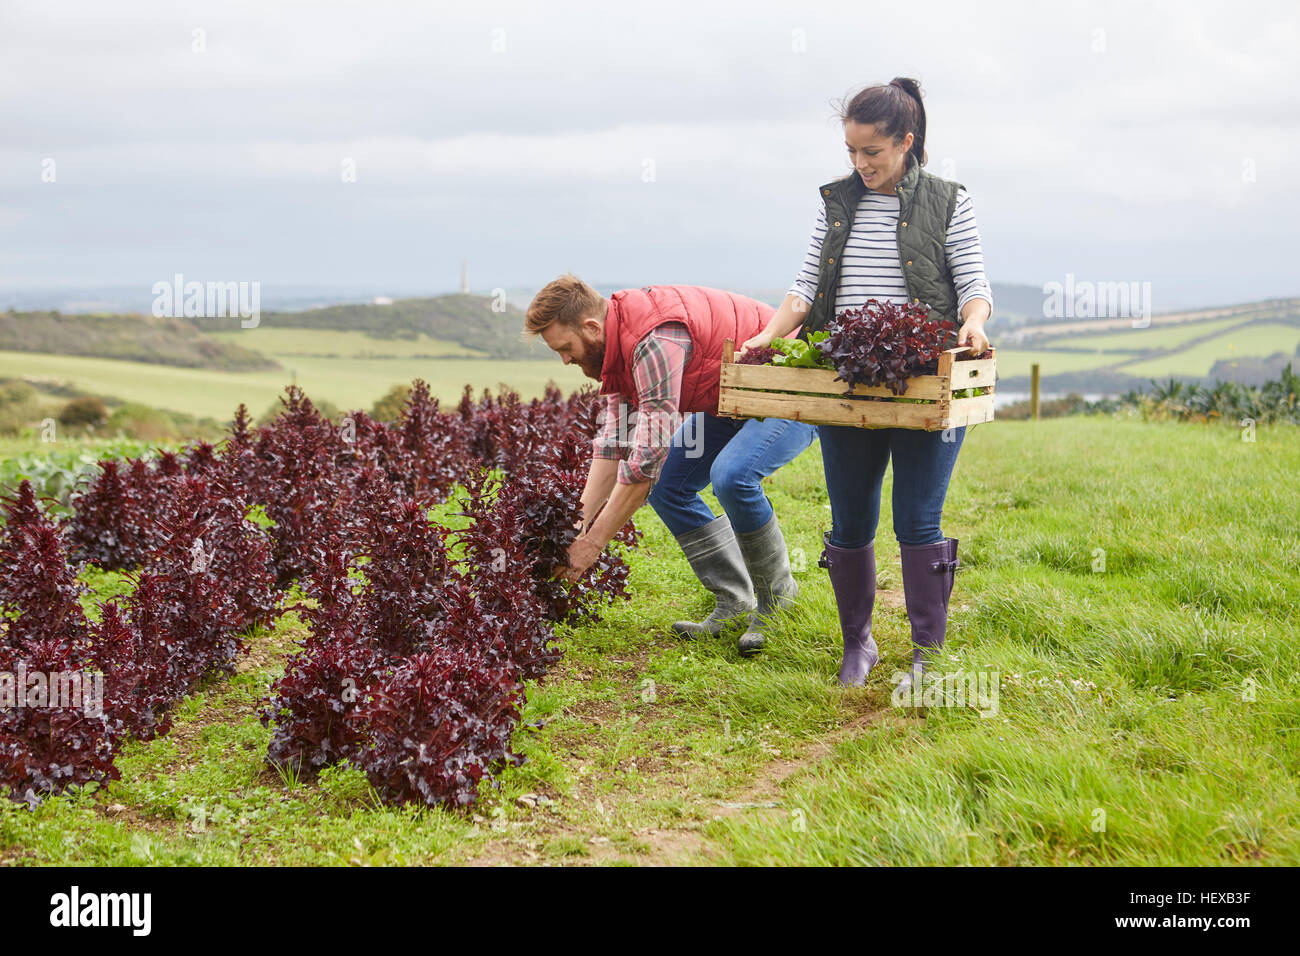 Couple on farm harvesting lettuce Stock Photo